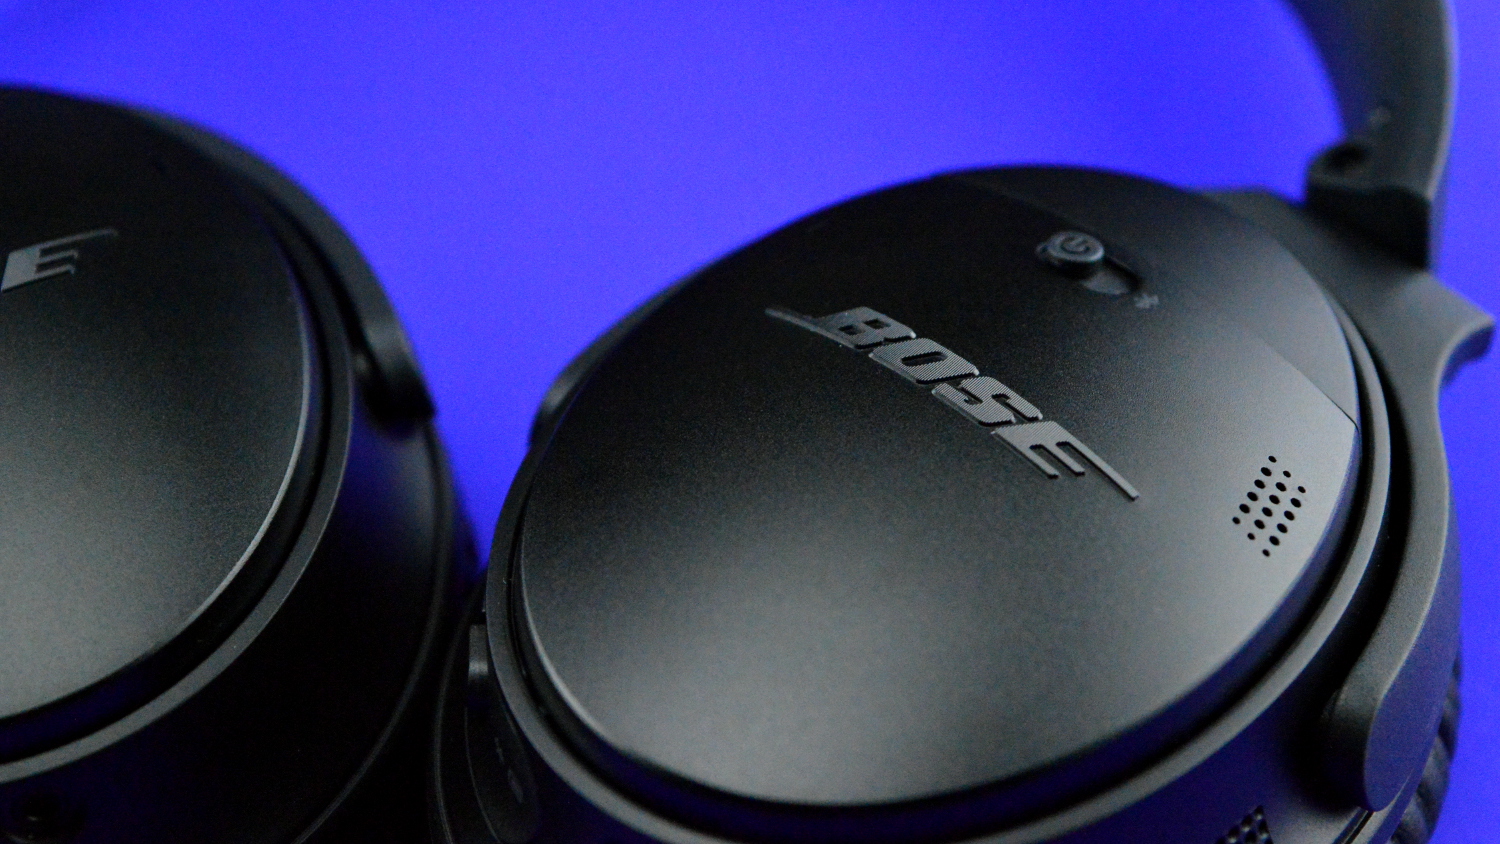 Bose QuietComfort 35 Wireless Noise-Cancelling Headphones - Black